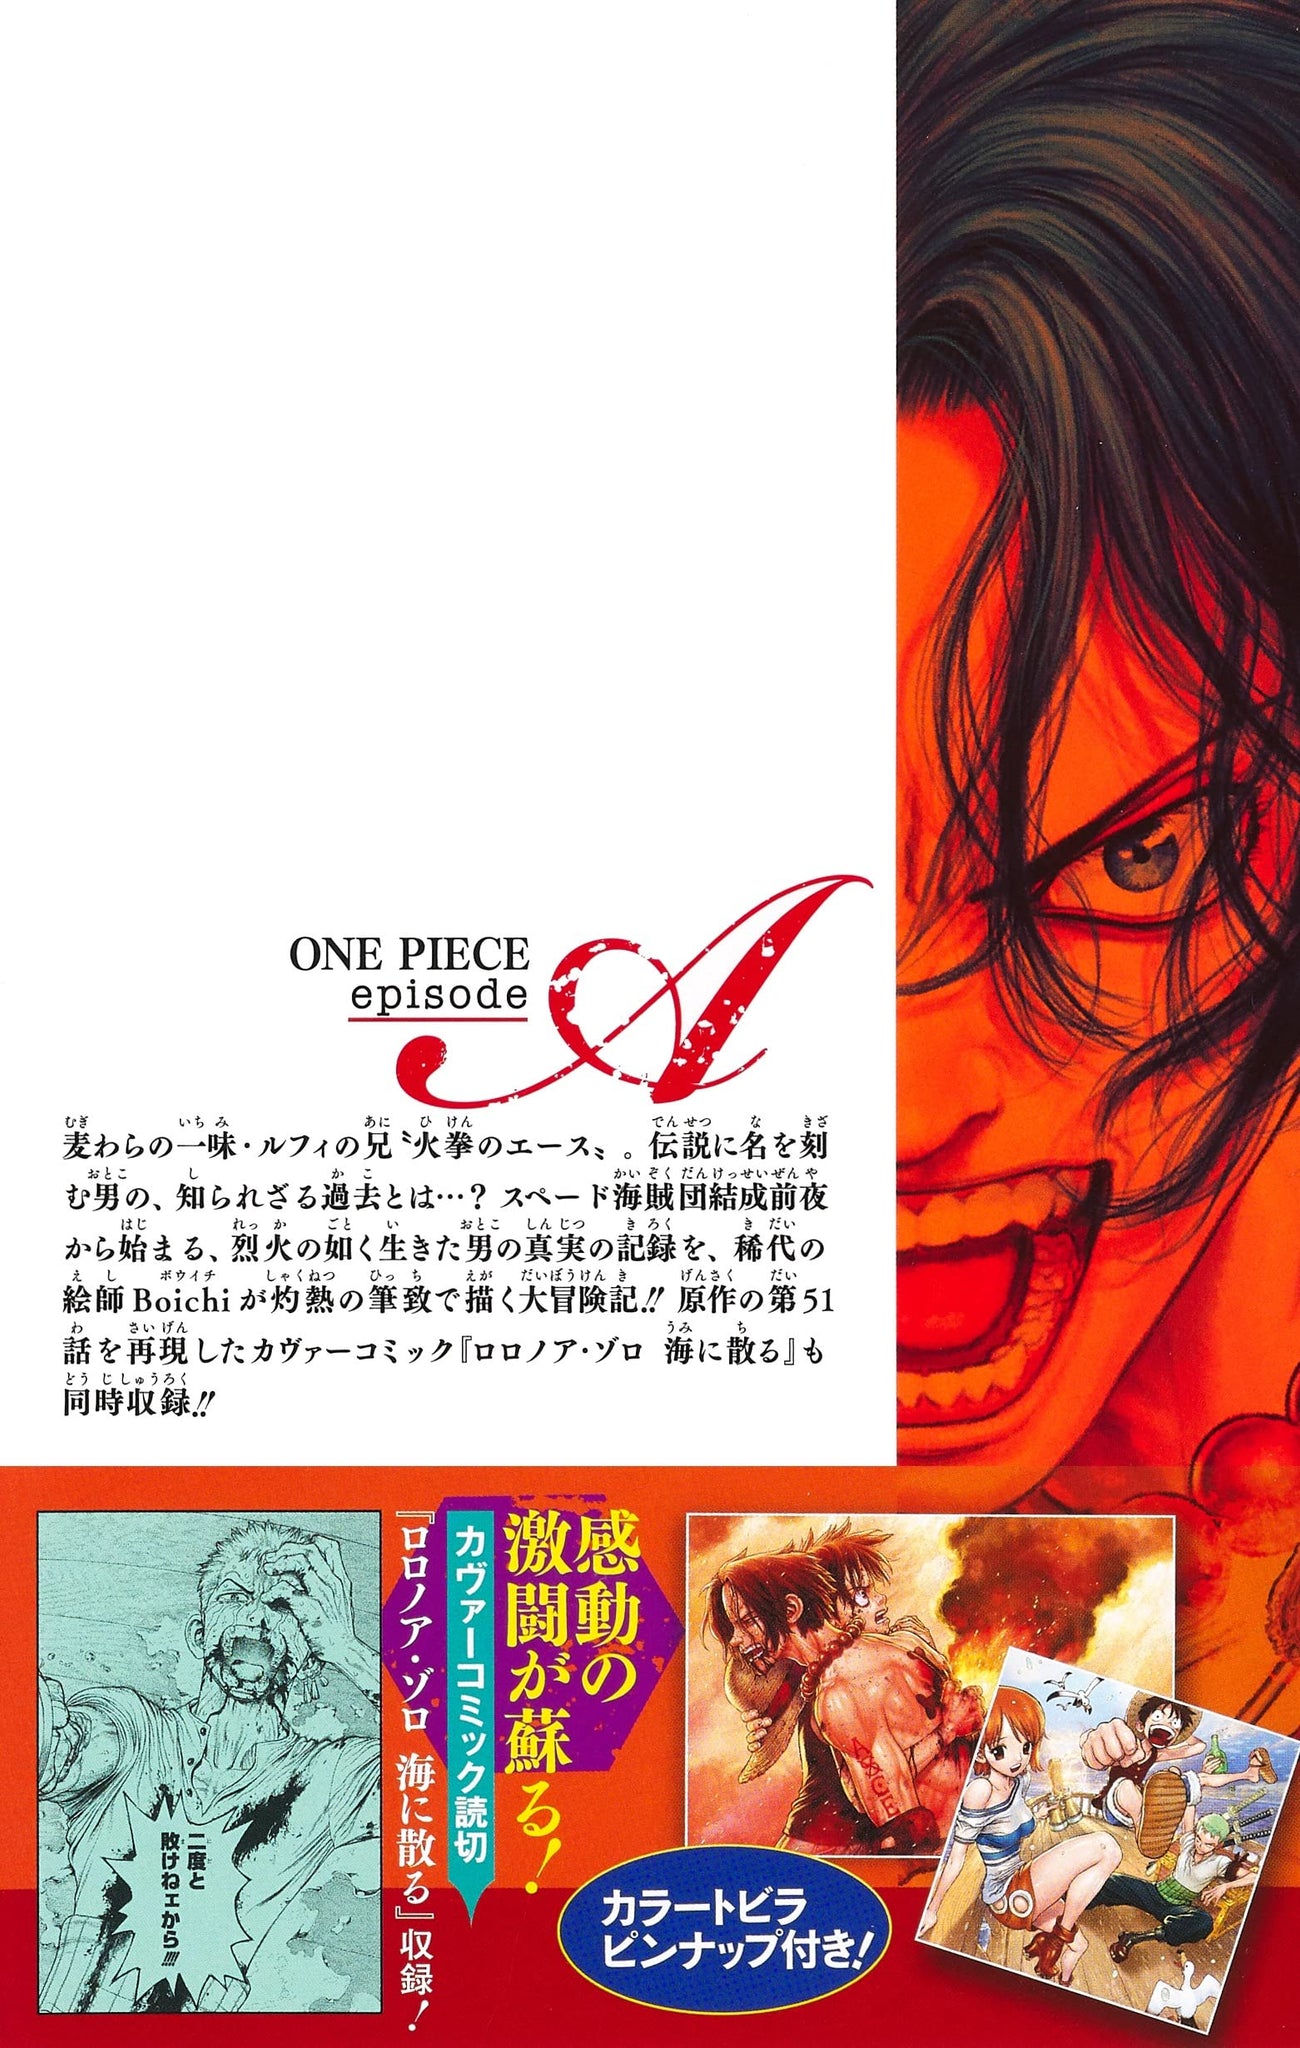 One Piece Episode A by Boichi Vol. 1